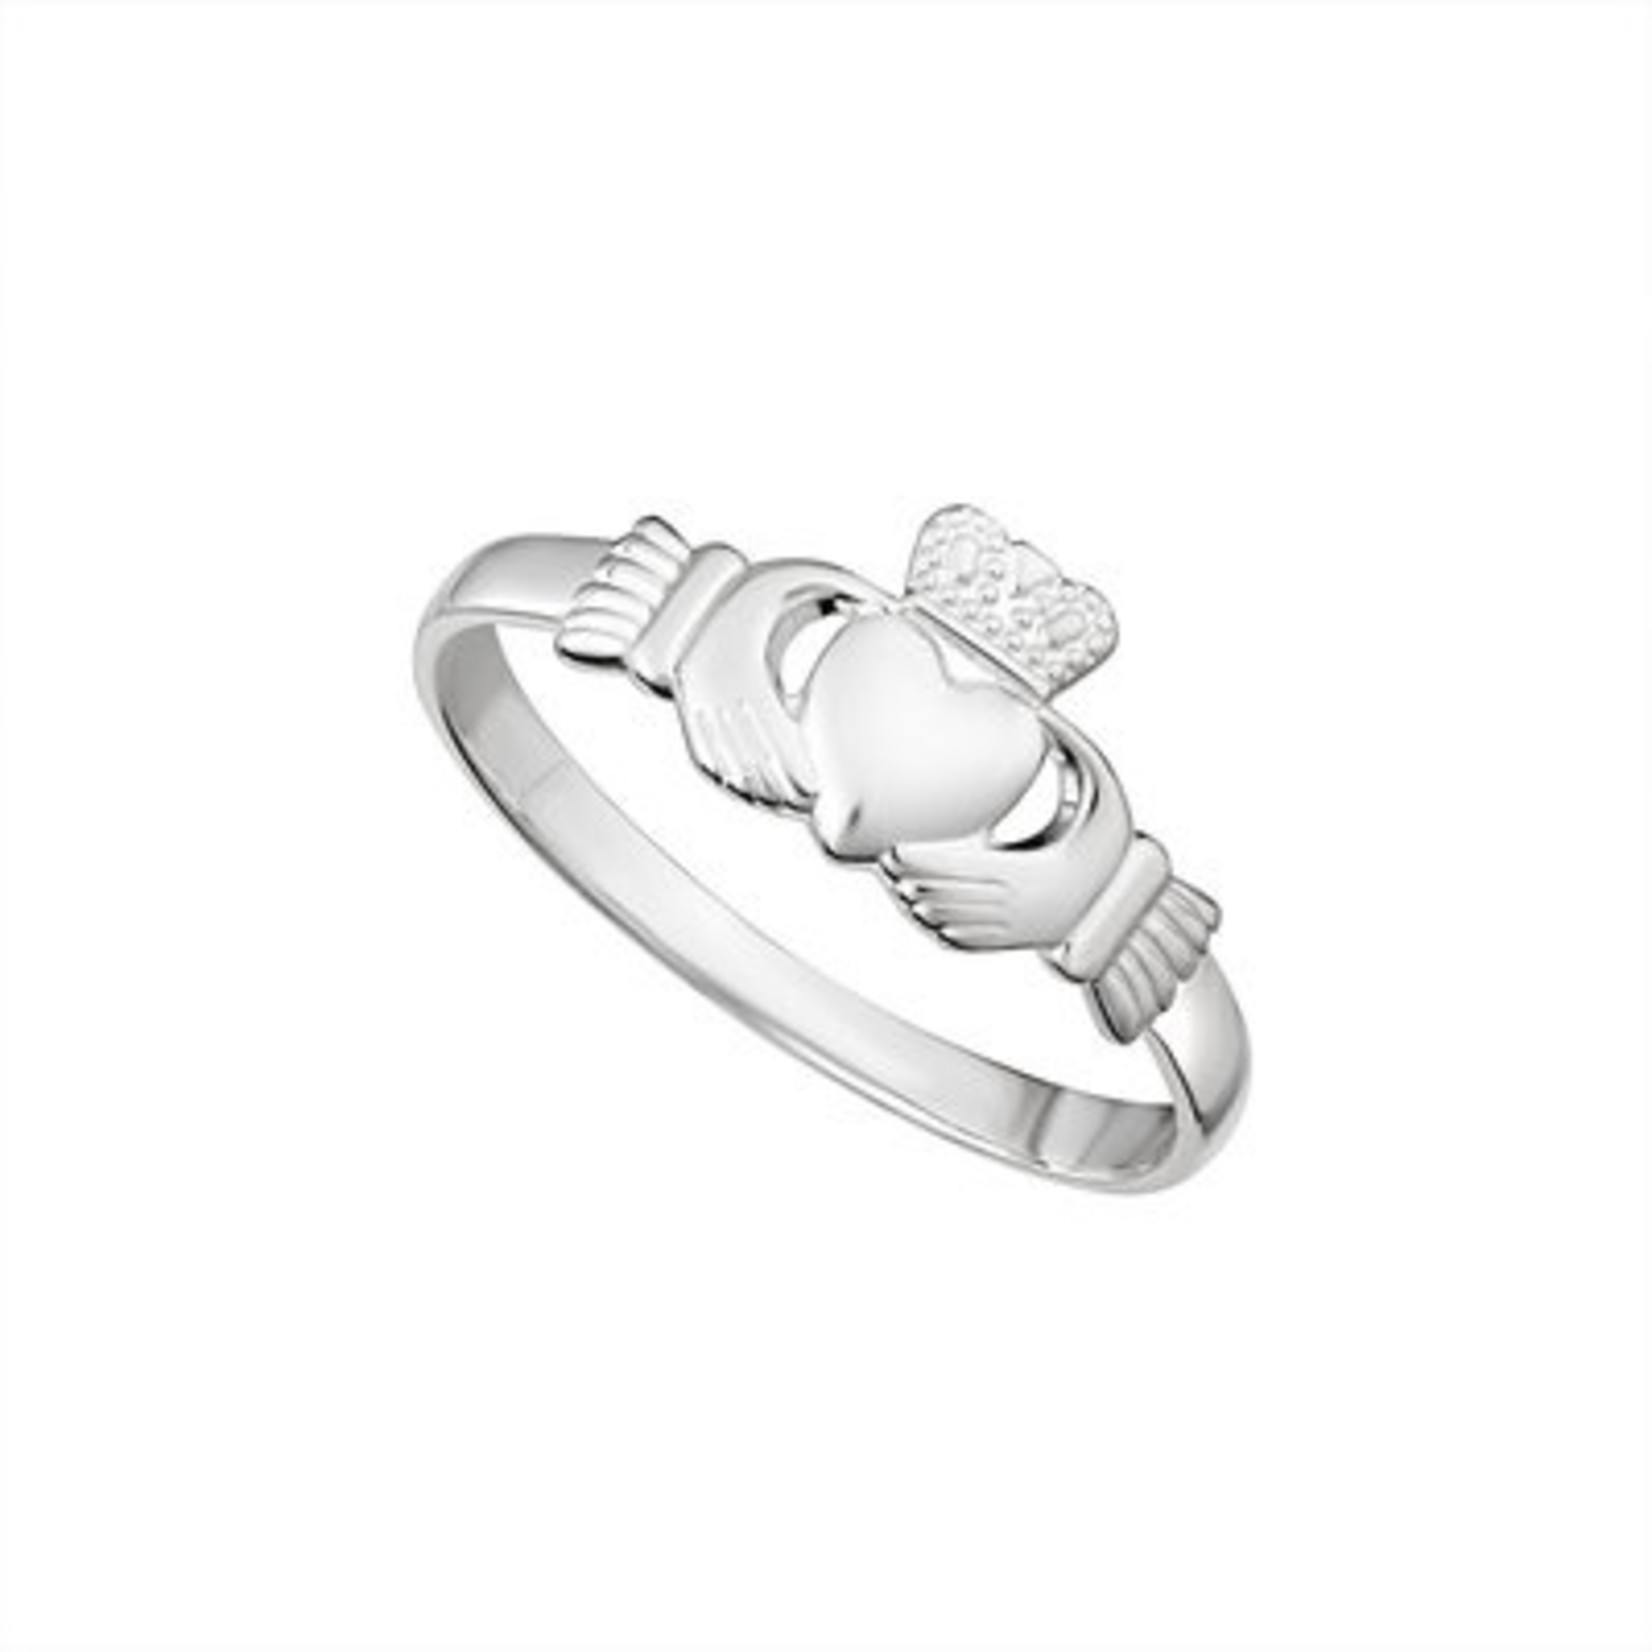 Solvar Light Sterling Silver Claddagh Ring